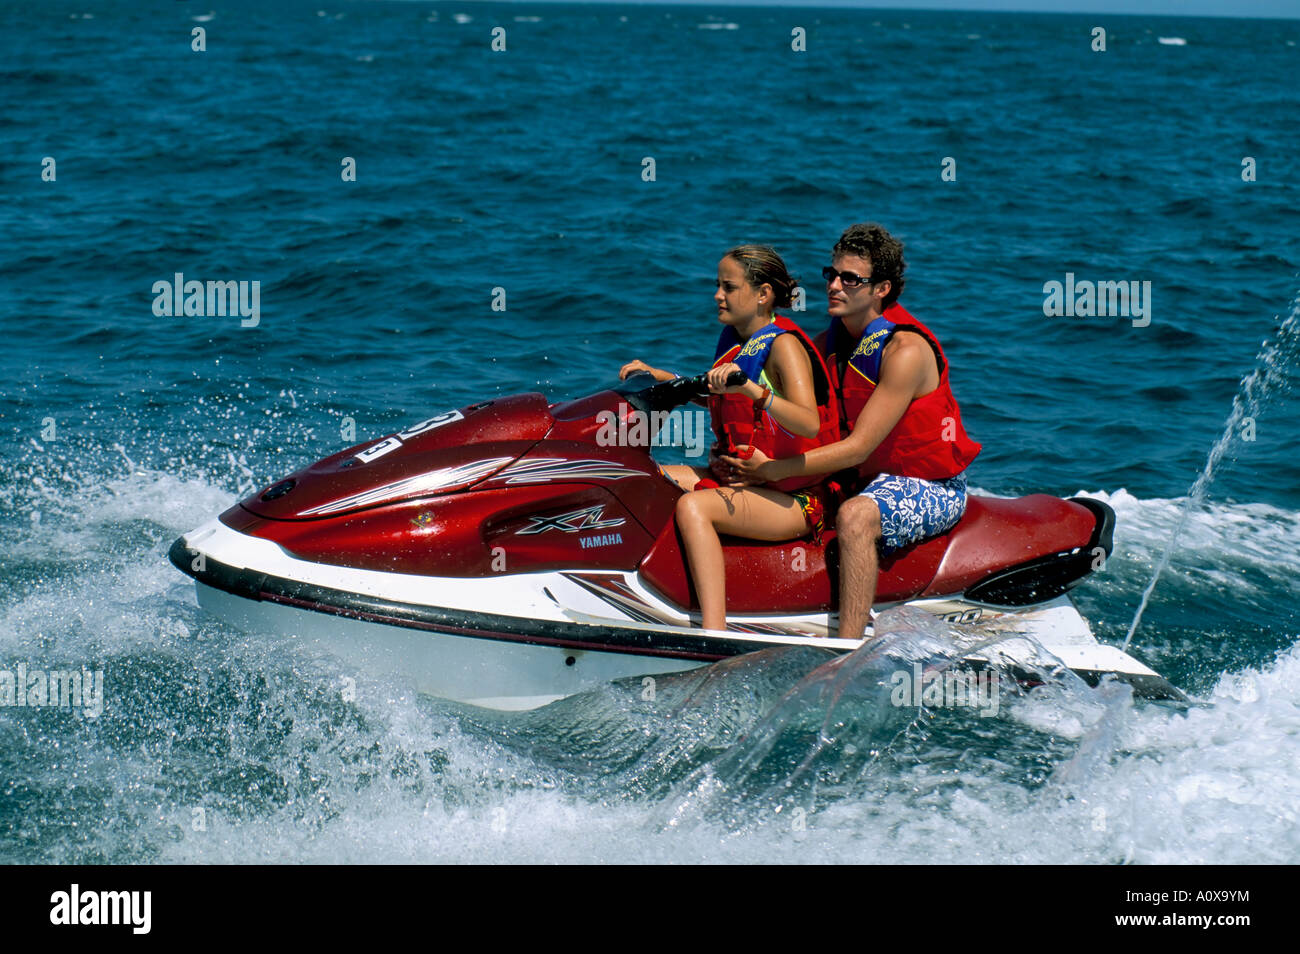 Couple on a jet ski Contadora island Las Perlas archipelago Panama Central America Stock Photo